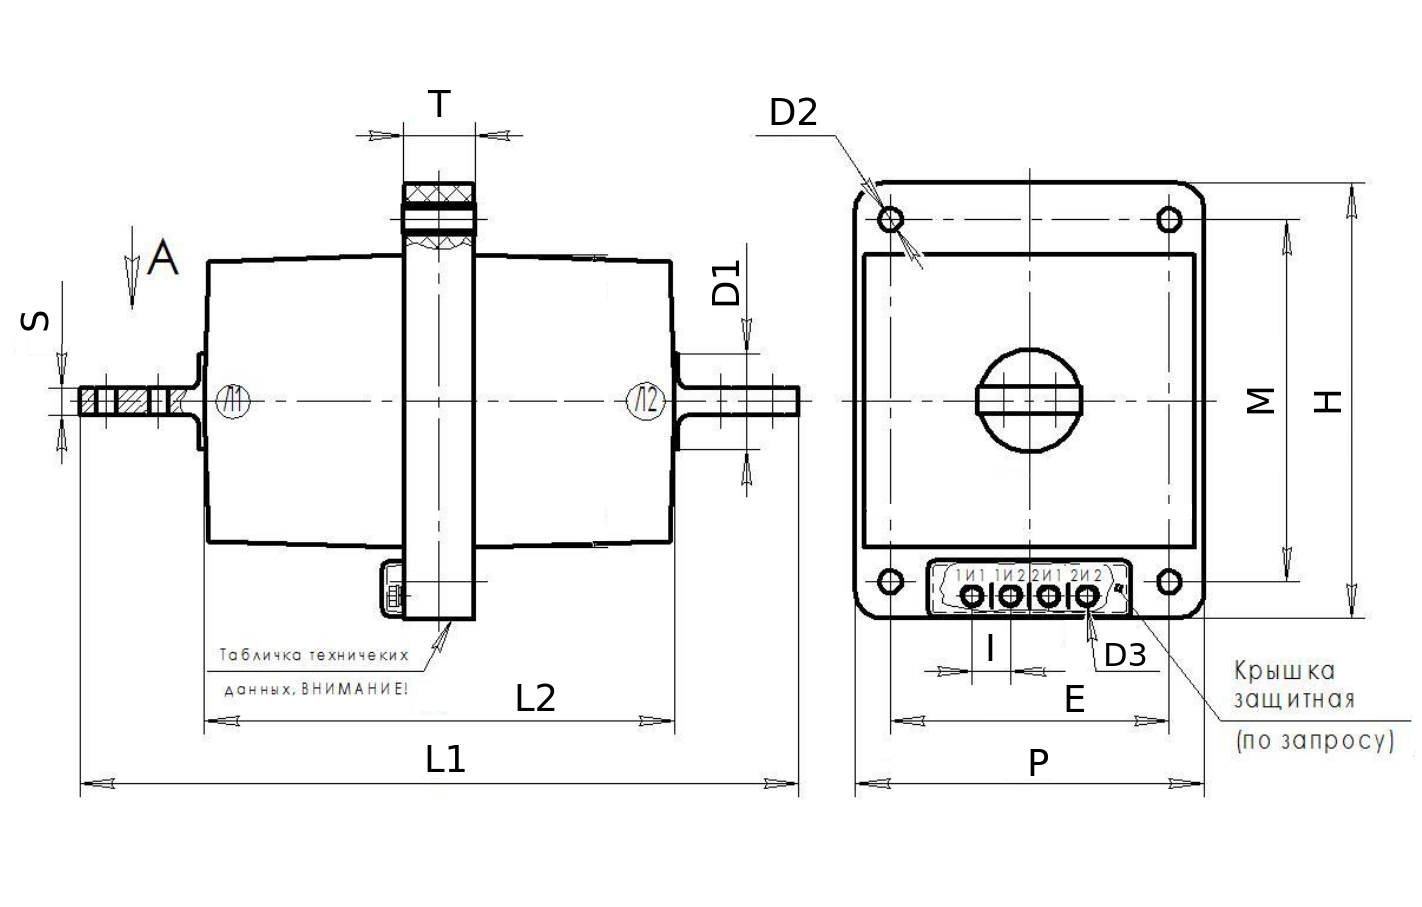 Трансформатор тока EKF stingray ТЛК-СТ-10-ТПК(1)-05/10Р10-10ВА/15ВА-600/5-600/5 31.5 81 У3, тип корпуса - ТПК(1), класс точности вторичных обмоток - 05/10Р10, кол-во вторичных обмоток - 2, коэффициент трансформации - 600/5